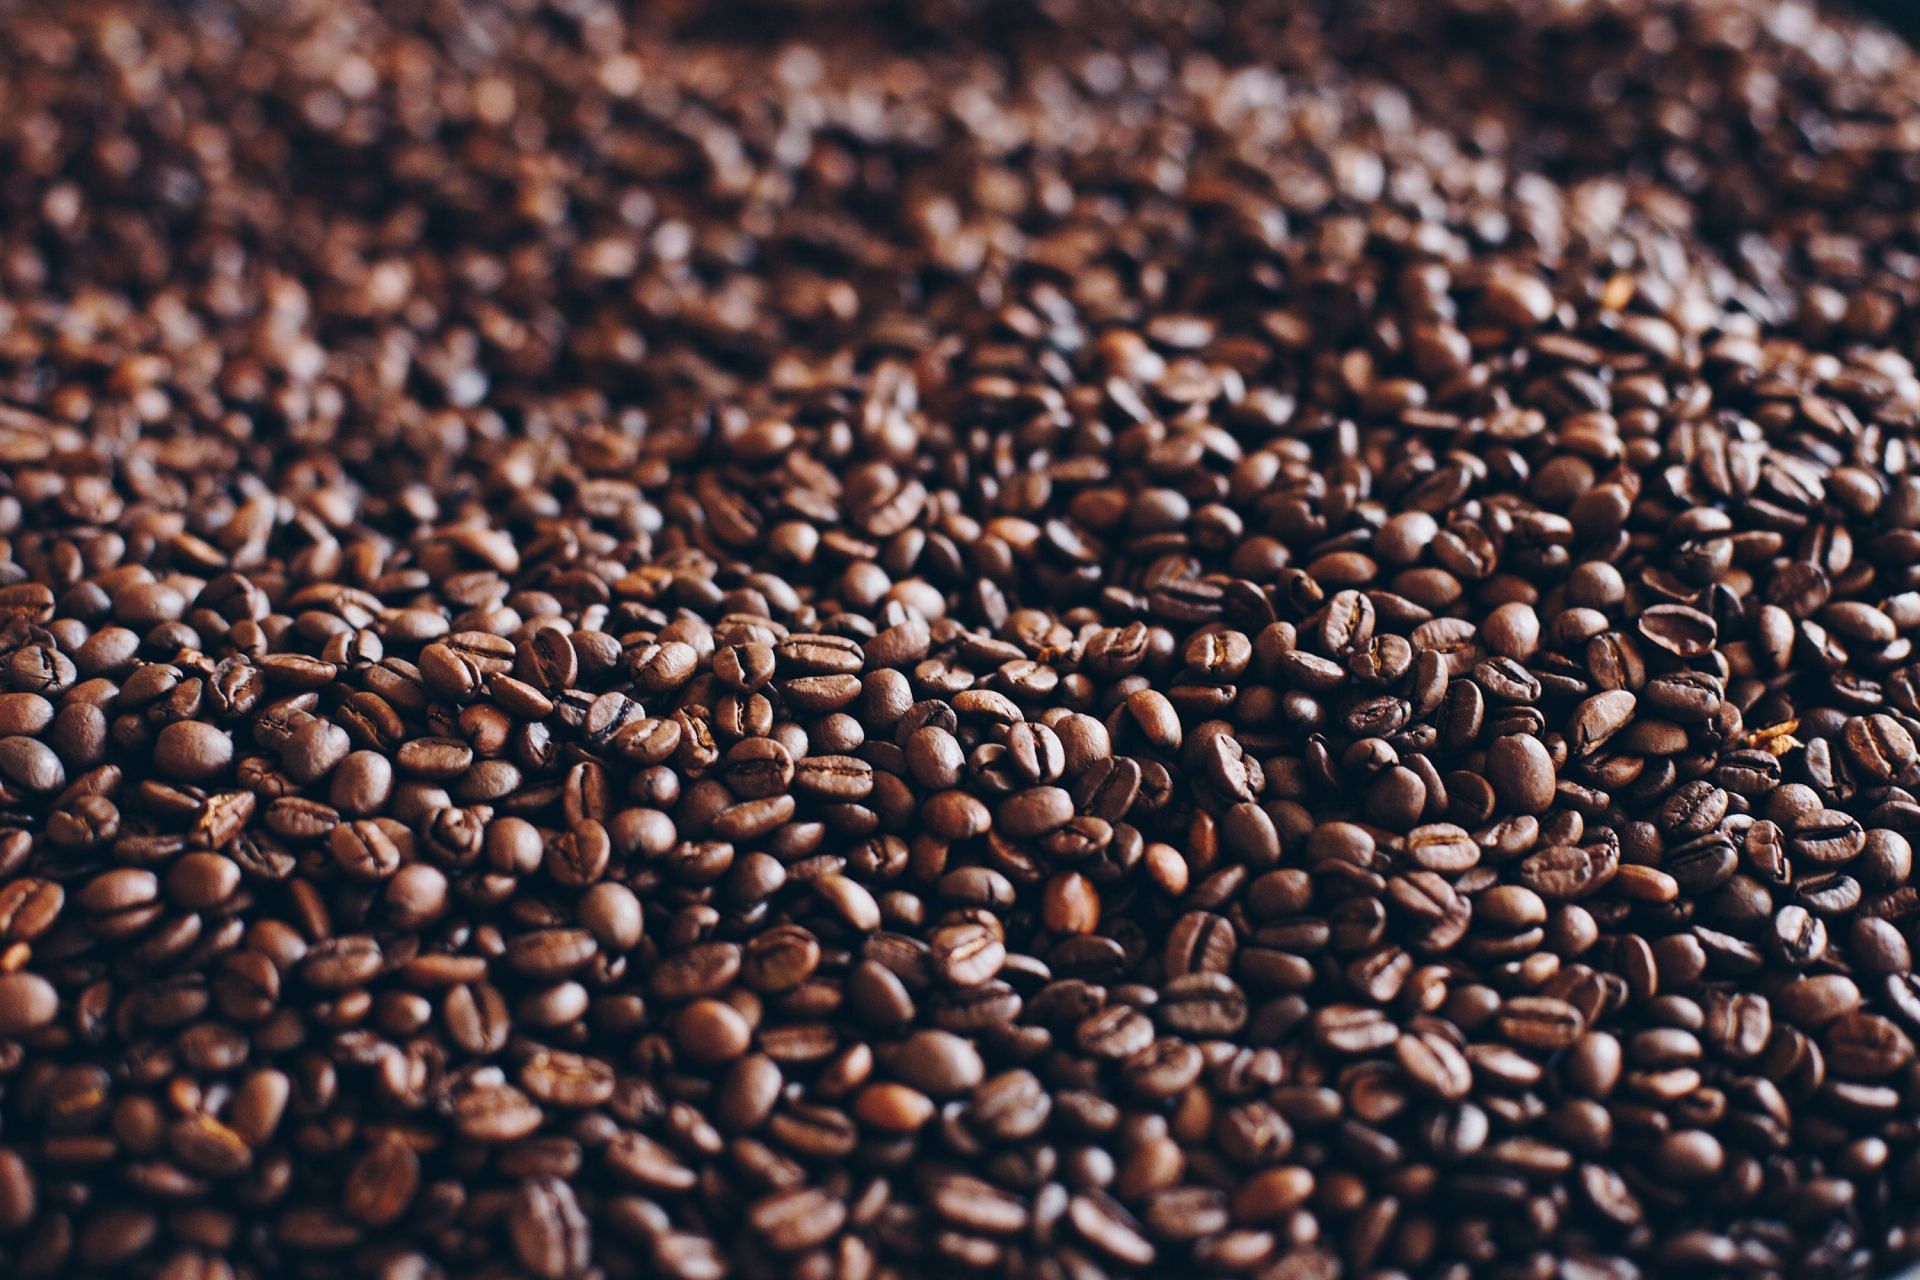 Reduce caffeine intake gradually rather than at once. (Image via Pexels/Adam Lukac)